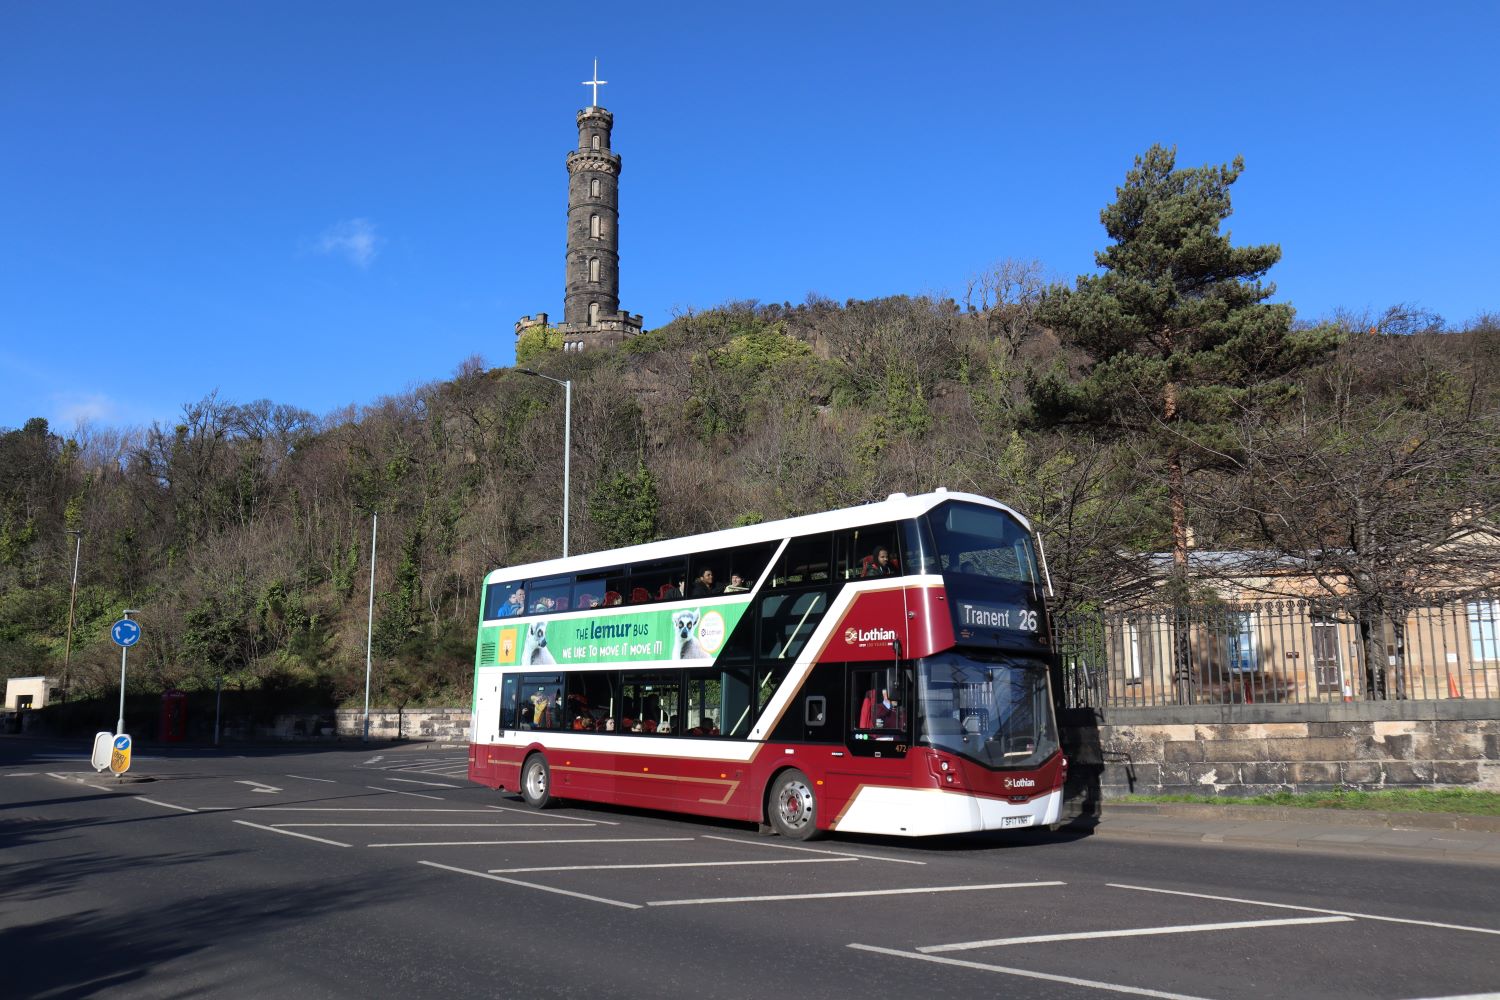 scotland bus funding cuts